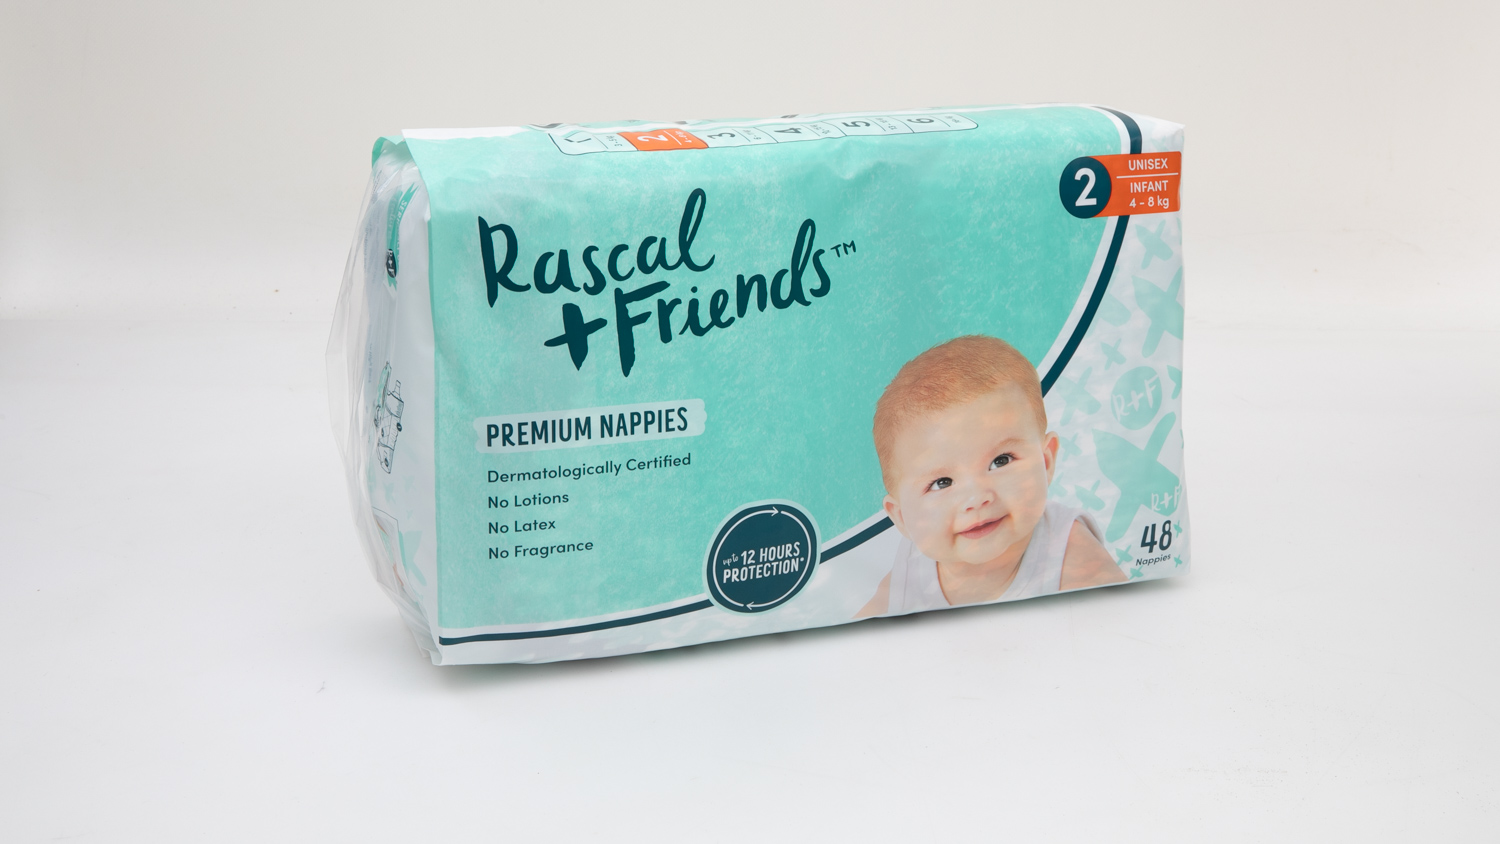 Rascal + Friends Premium Nappies Unisex Infant Size 2 carousel image